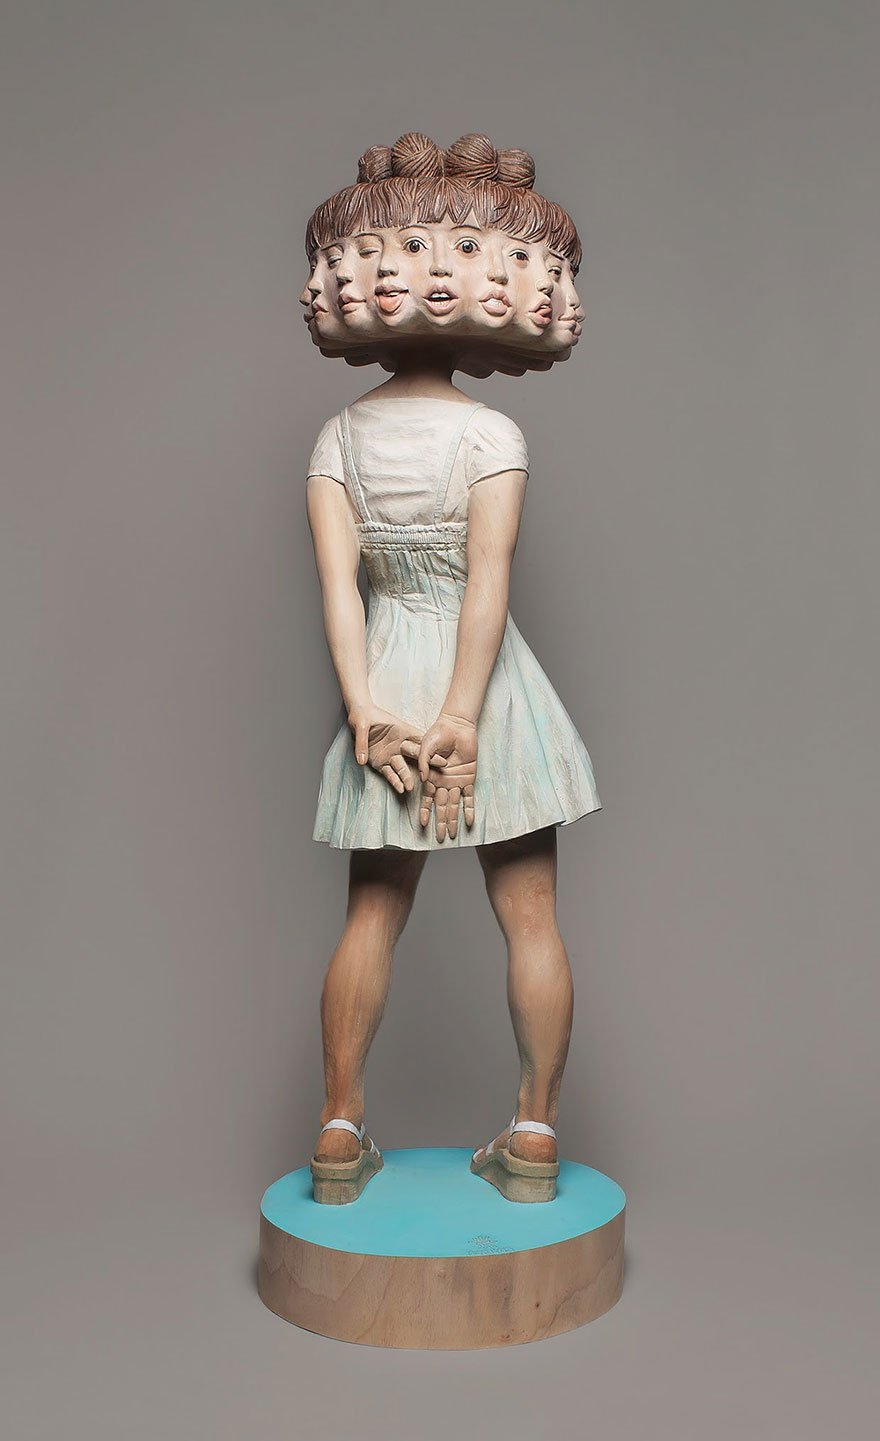 Surreal Wooden Human Statues By Yoshitoshi Kanemaki